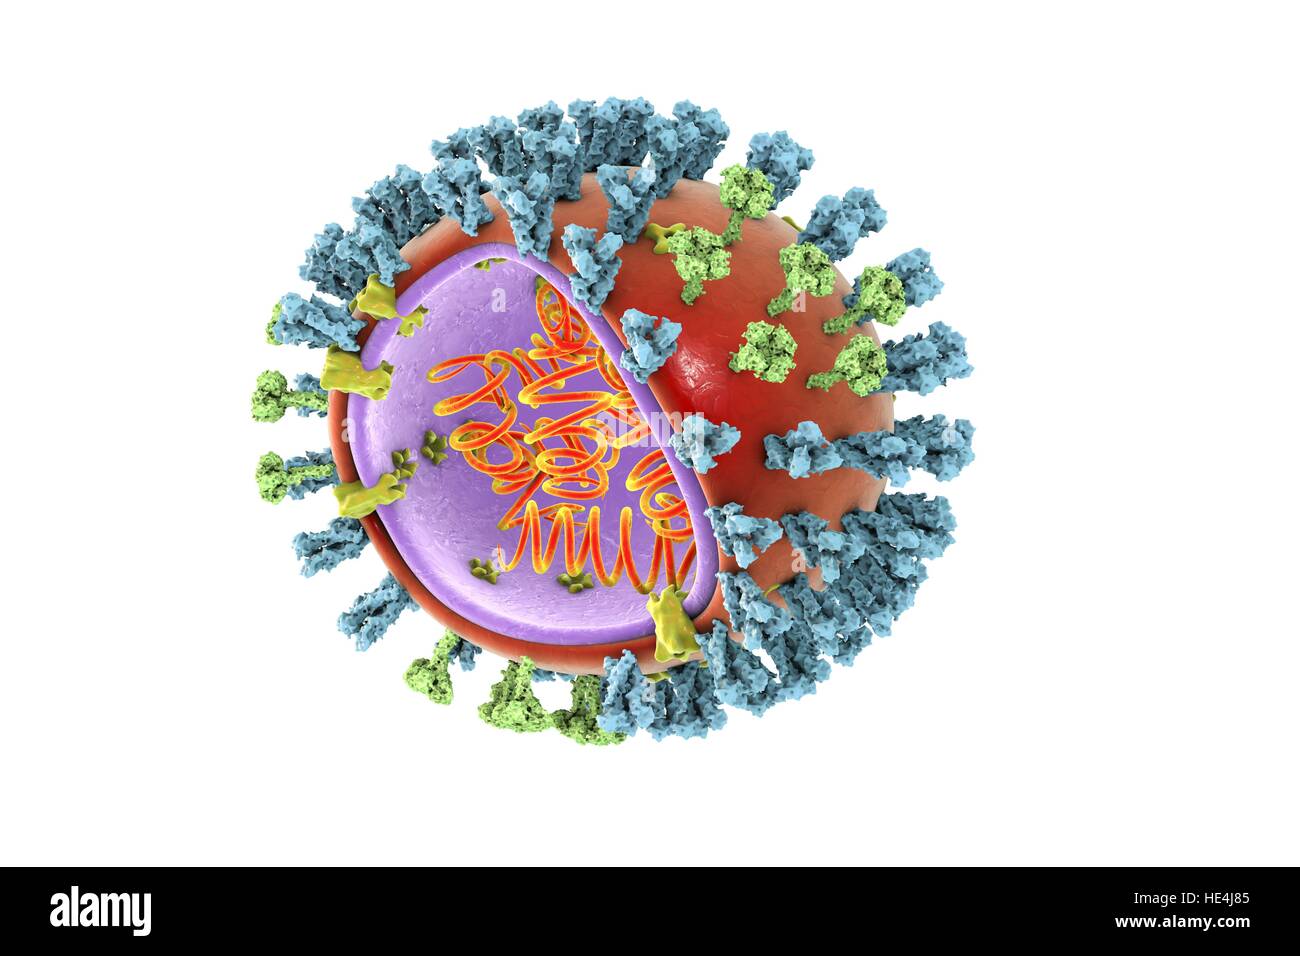 El virus de la gripe aviar.3D ilustración de la gripe aviar H5N8 virus partícula.El virus se compone de ácido ribonucleico (ARN,naranja bobinas) core,rodeado por nucleocapsid (morado) sobre lípidos (naranja).Spanning cápside envolvente M2 son proteínas (amarillo), que actúan como bombas de protones.En dos tipos de sobres Foto de stock